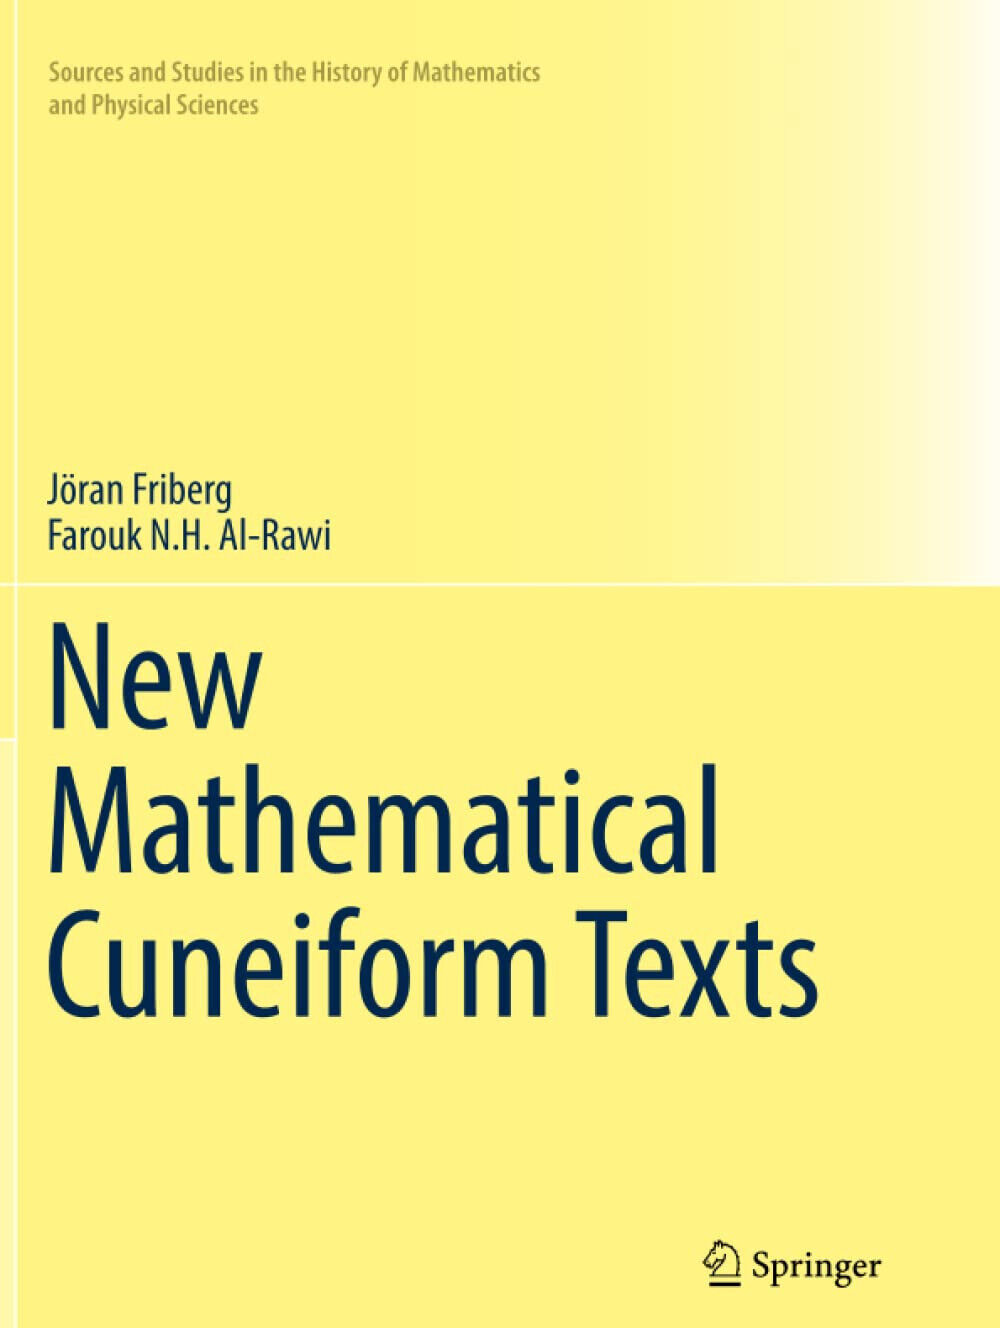 New Mathematical Cuneiform Texts - Farouk N. H. Al-Rawi, J?ran Friberg - 2018